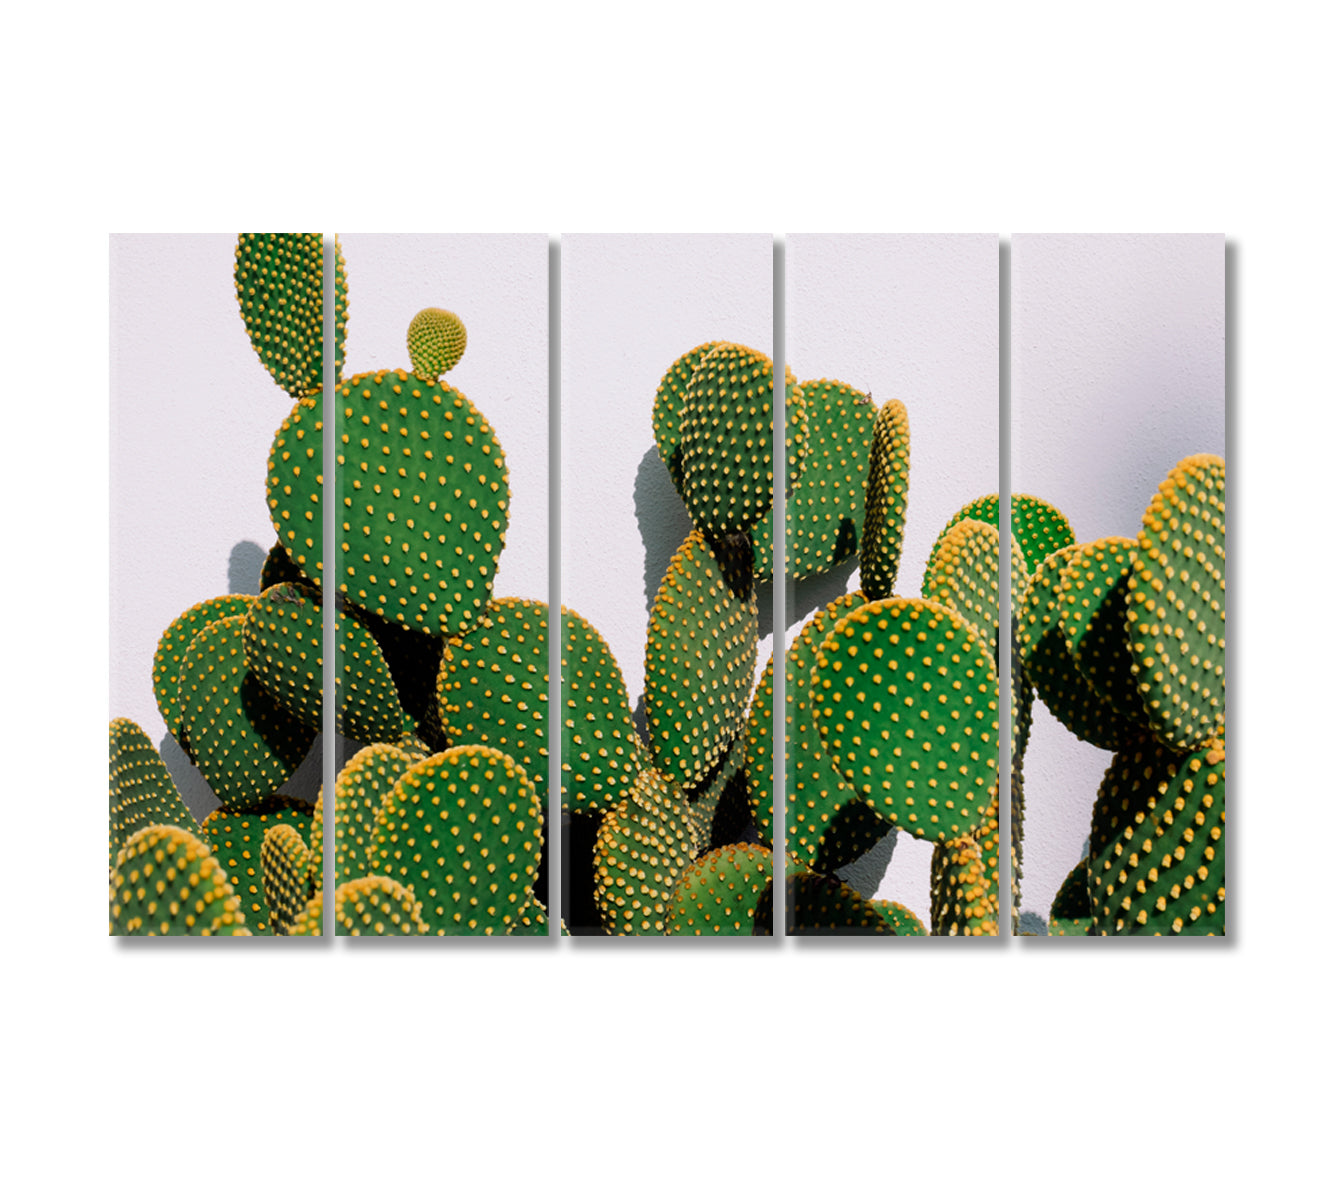 Bunny Ear Cactus Wall Decor Canvas-Canvas Print-CetArt-5 Panels-36x24 inches-CetArt